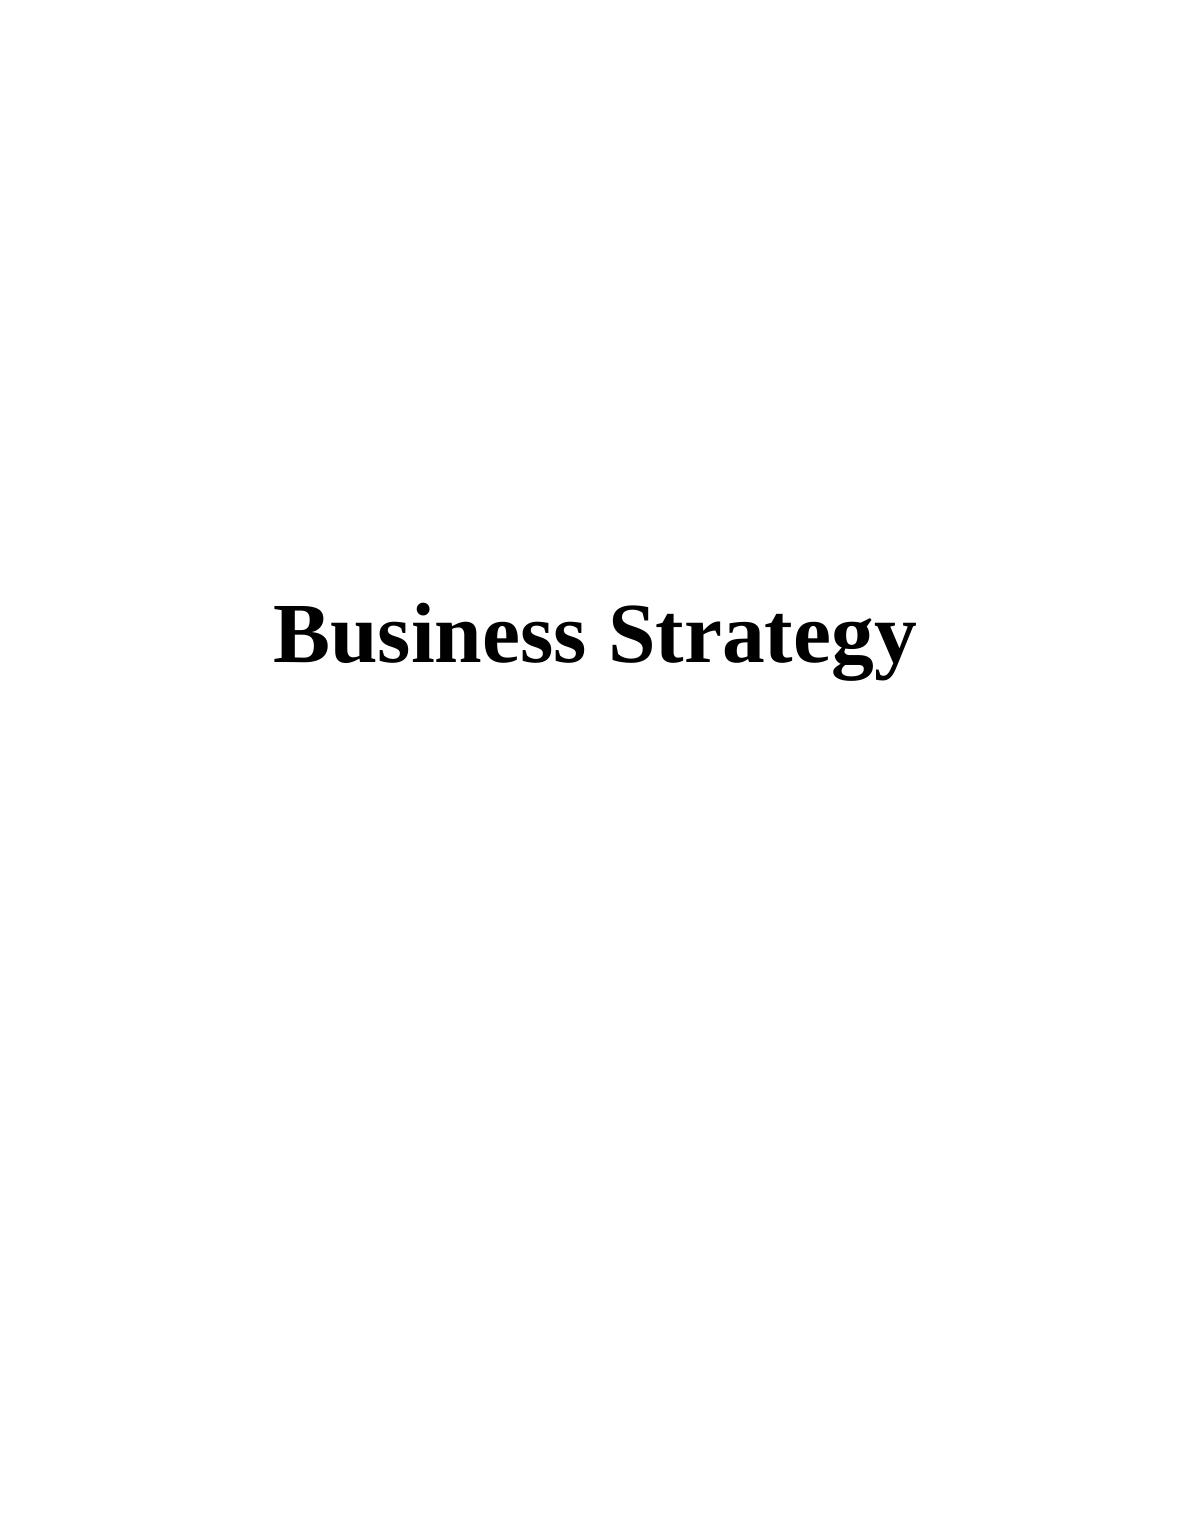 Implementation of new business strategies for Volkswagen_1